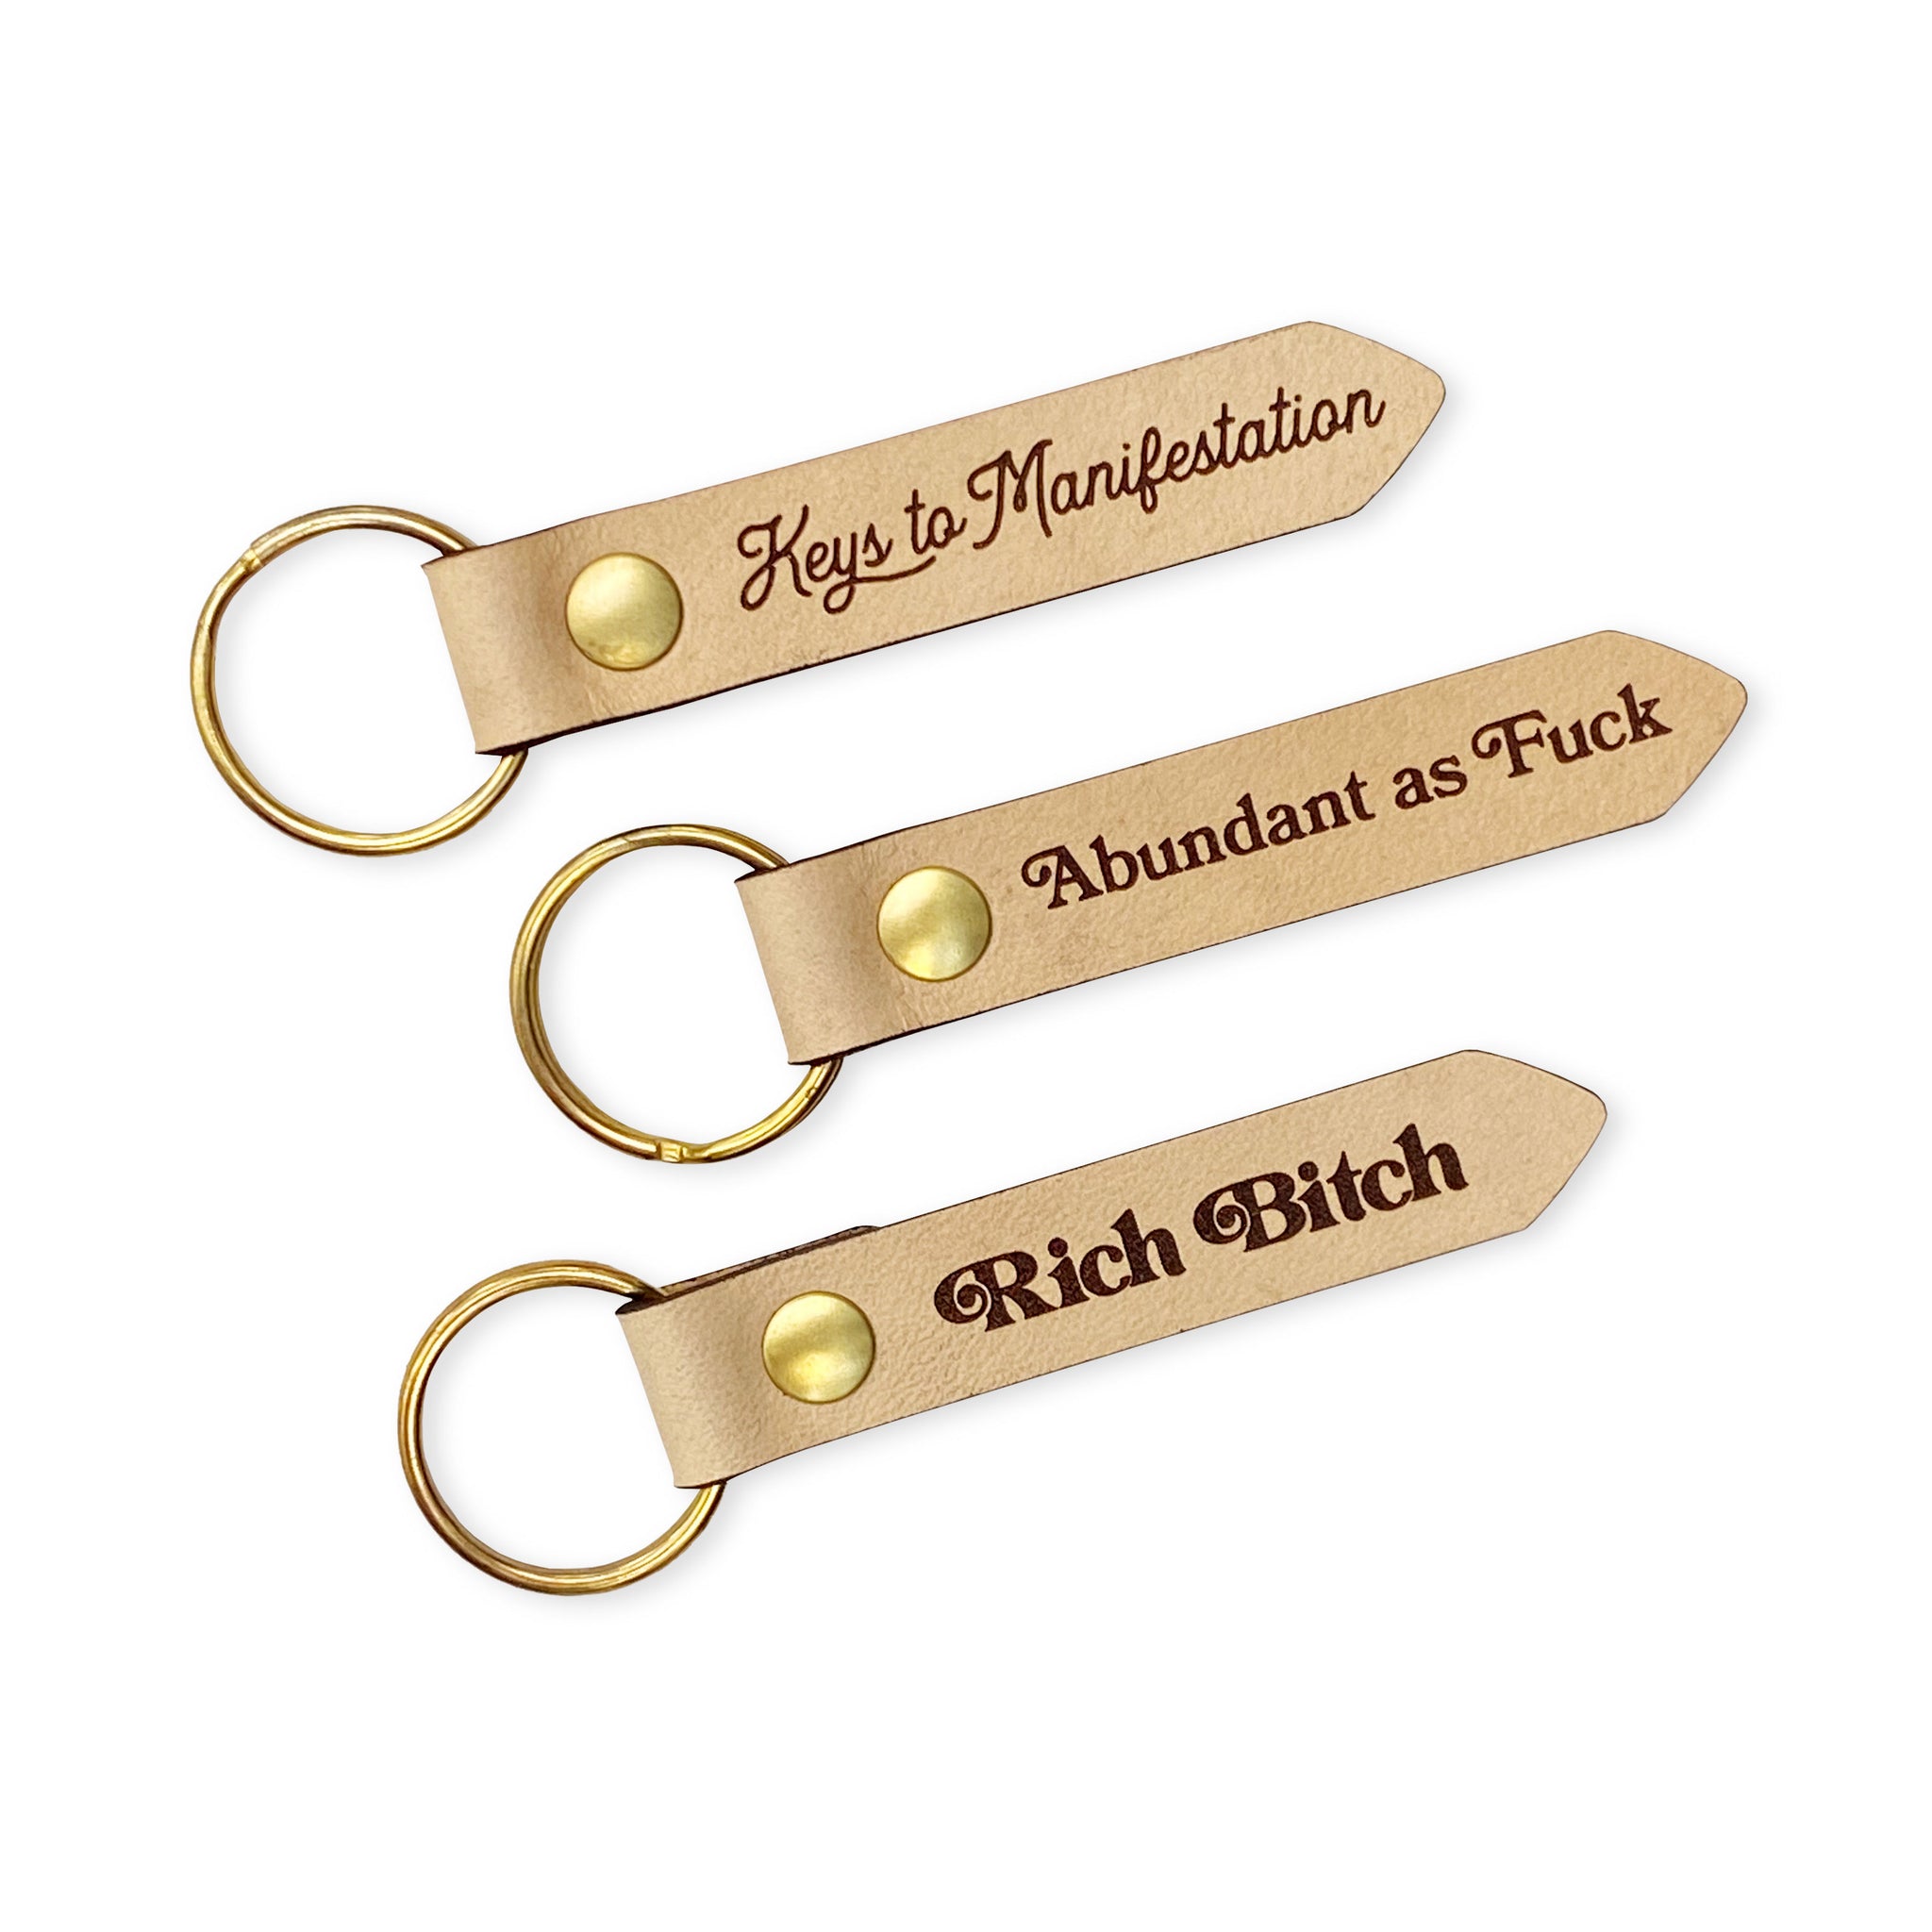 Keys to Manifestation Leather Keychain Flags